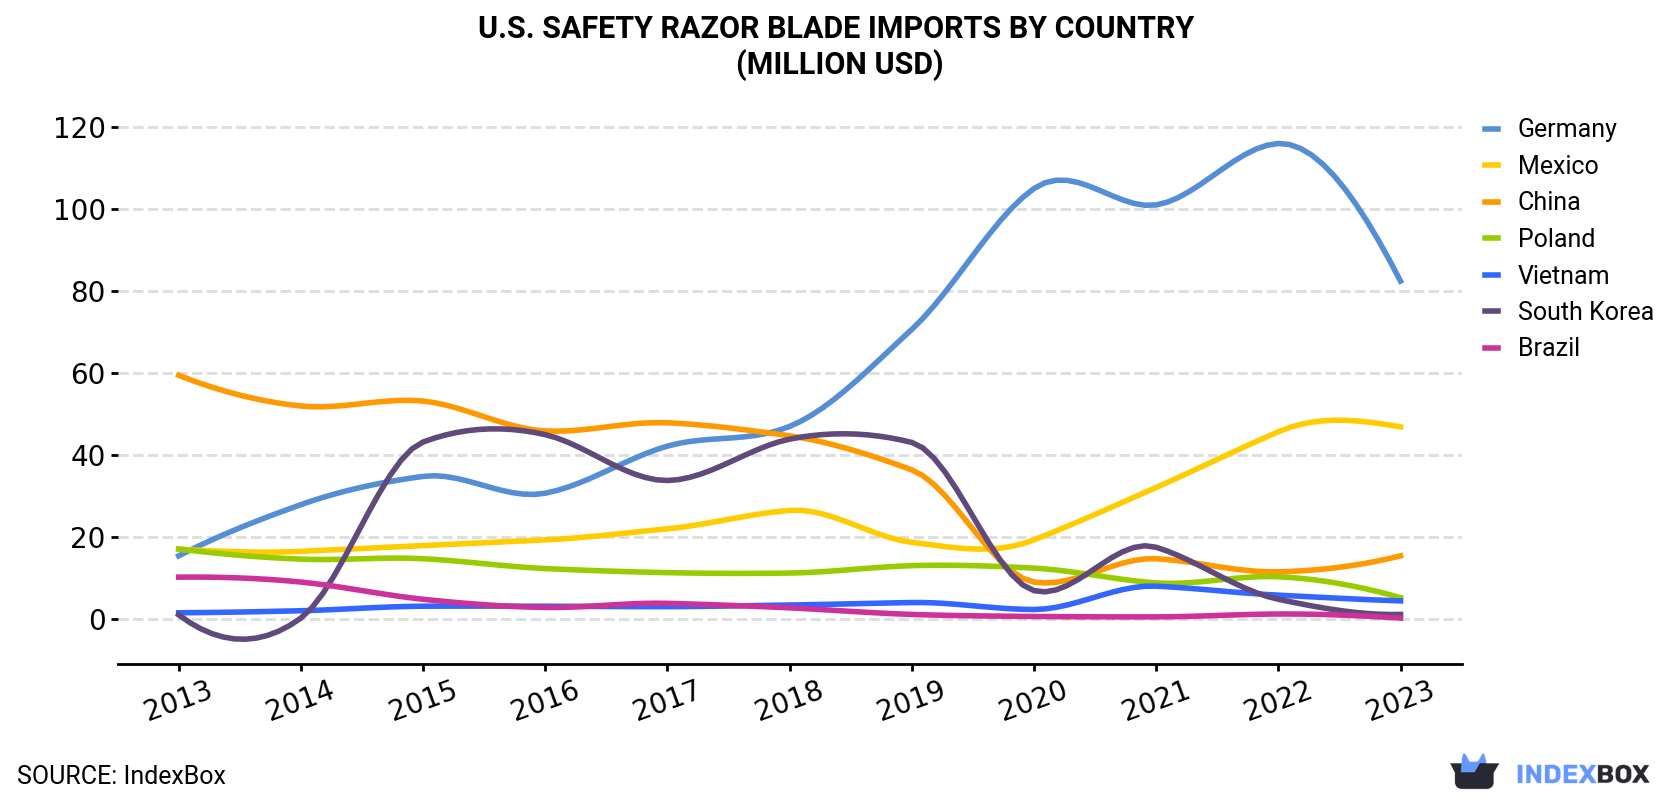 U.S. Safety Razor Blade Imports By Country (Million USD)